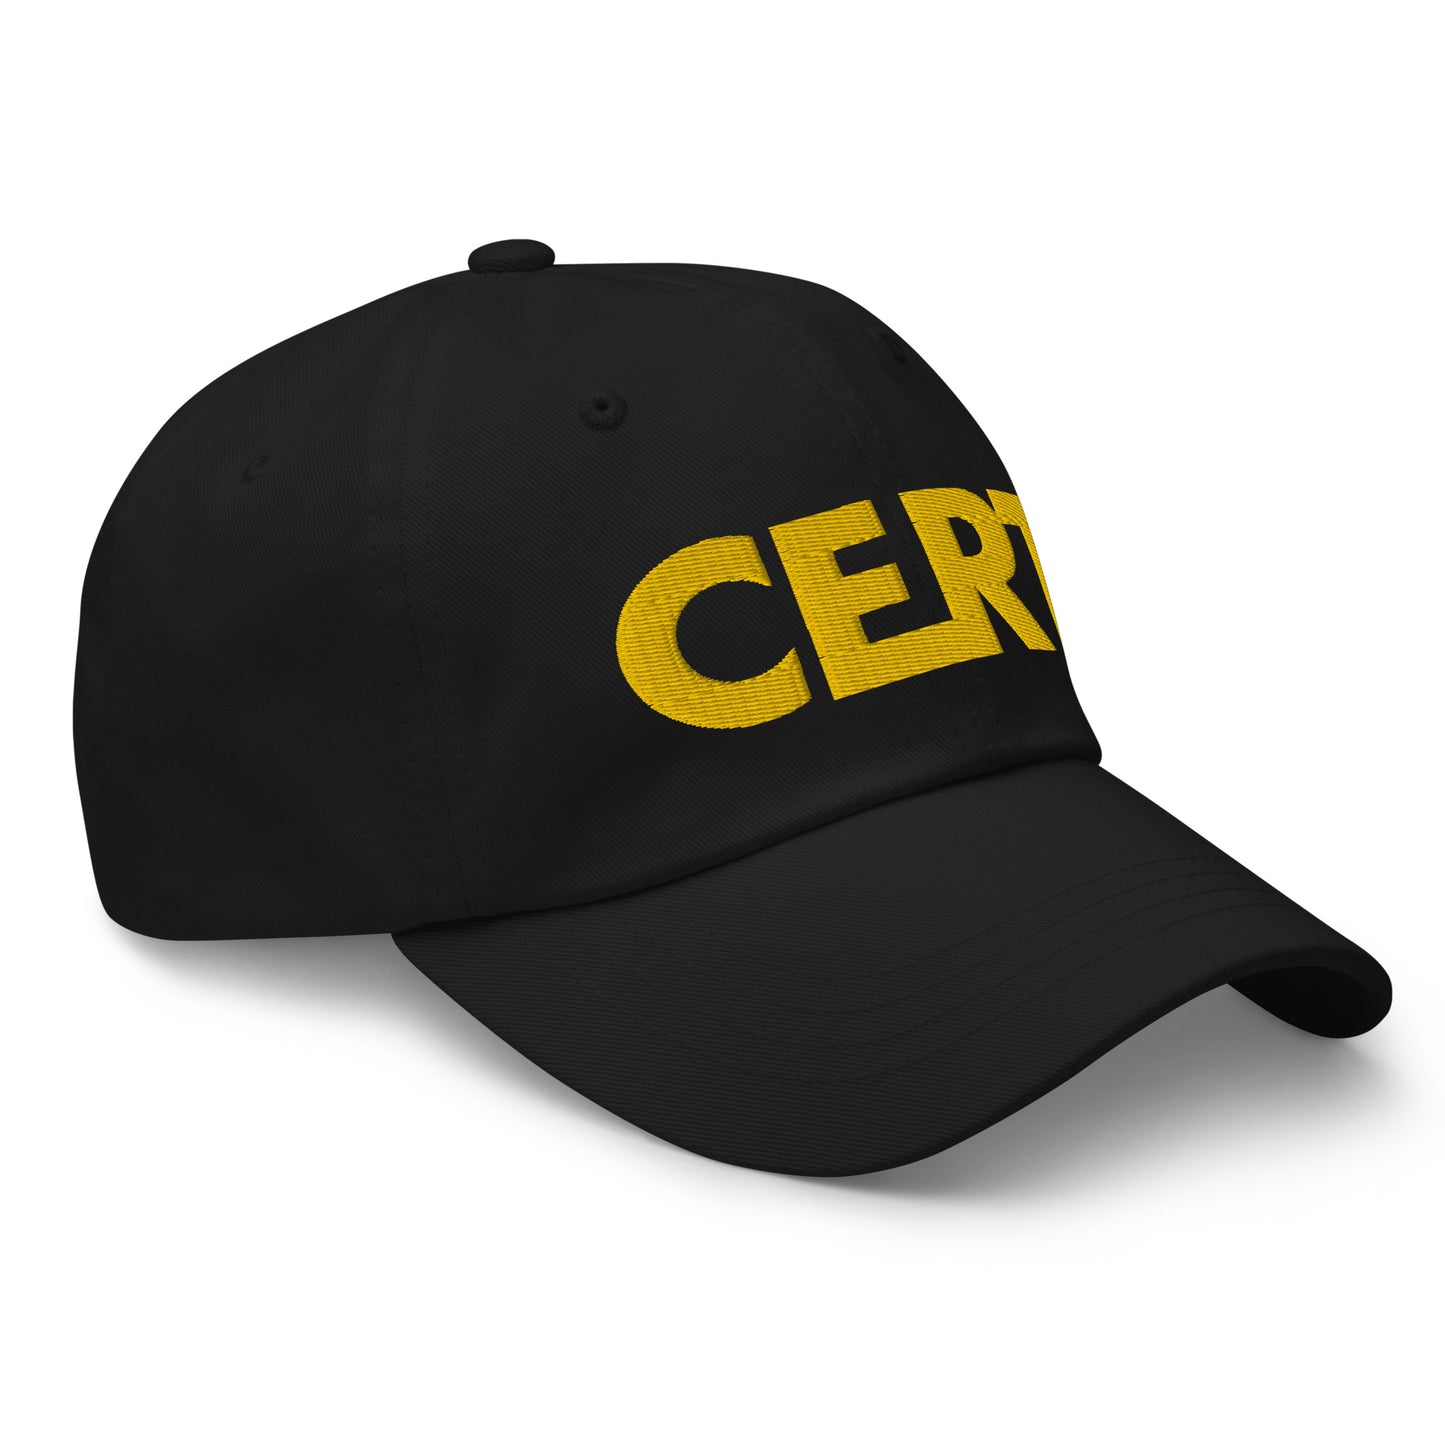 CERT Minimalist Hat